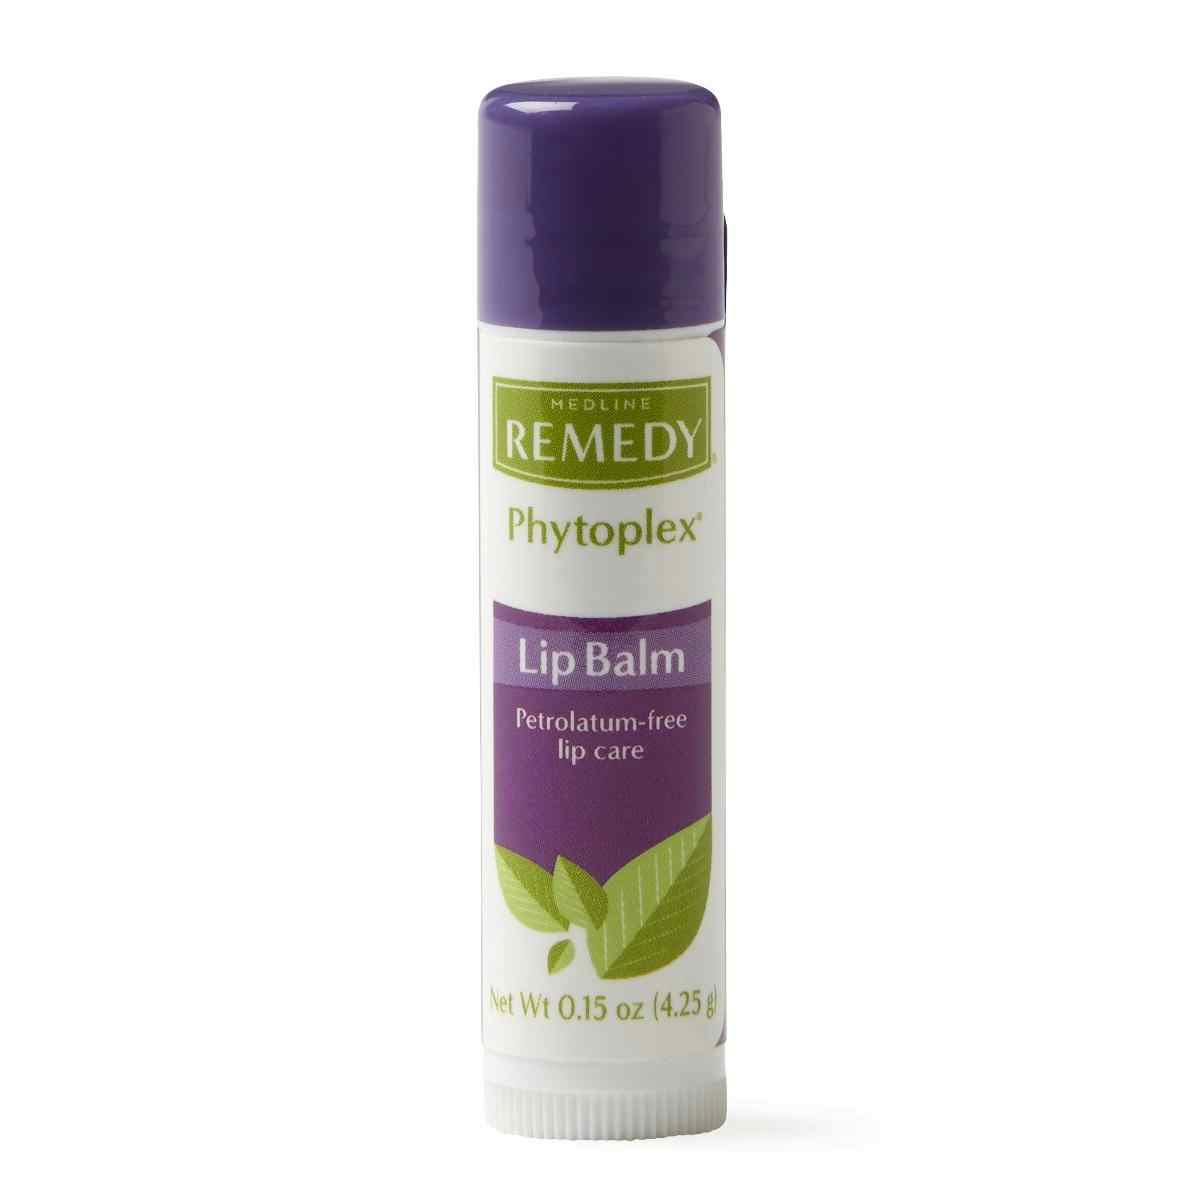 Medline Remedy Phytoplex Lip Balm, 0.15 oz., MSC092915H, 1 Each